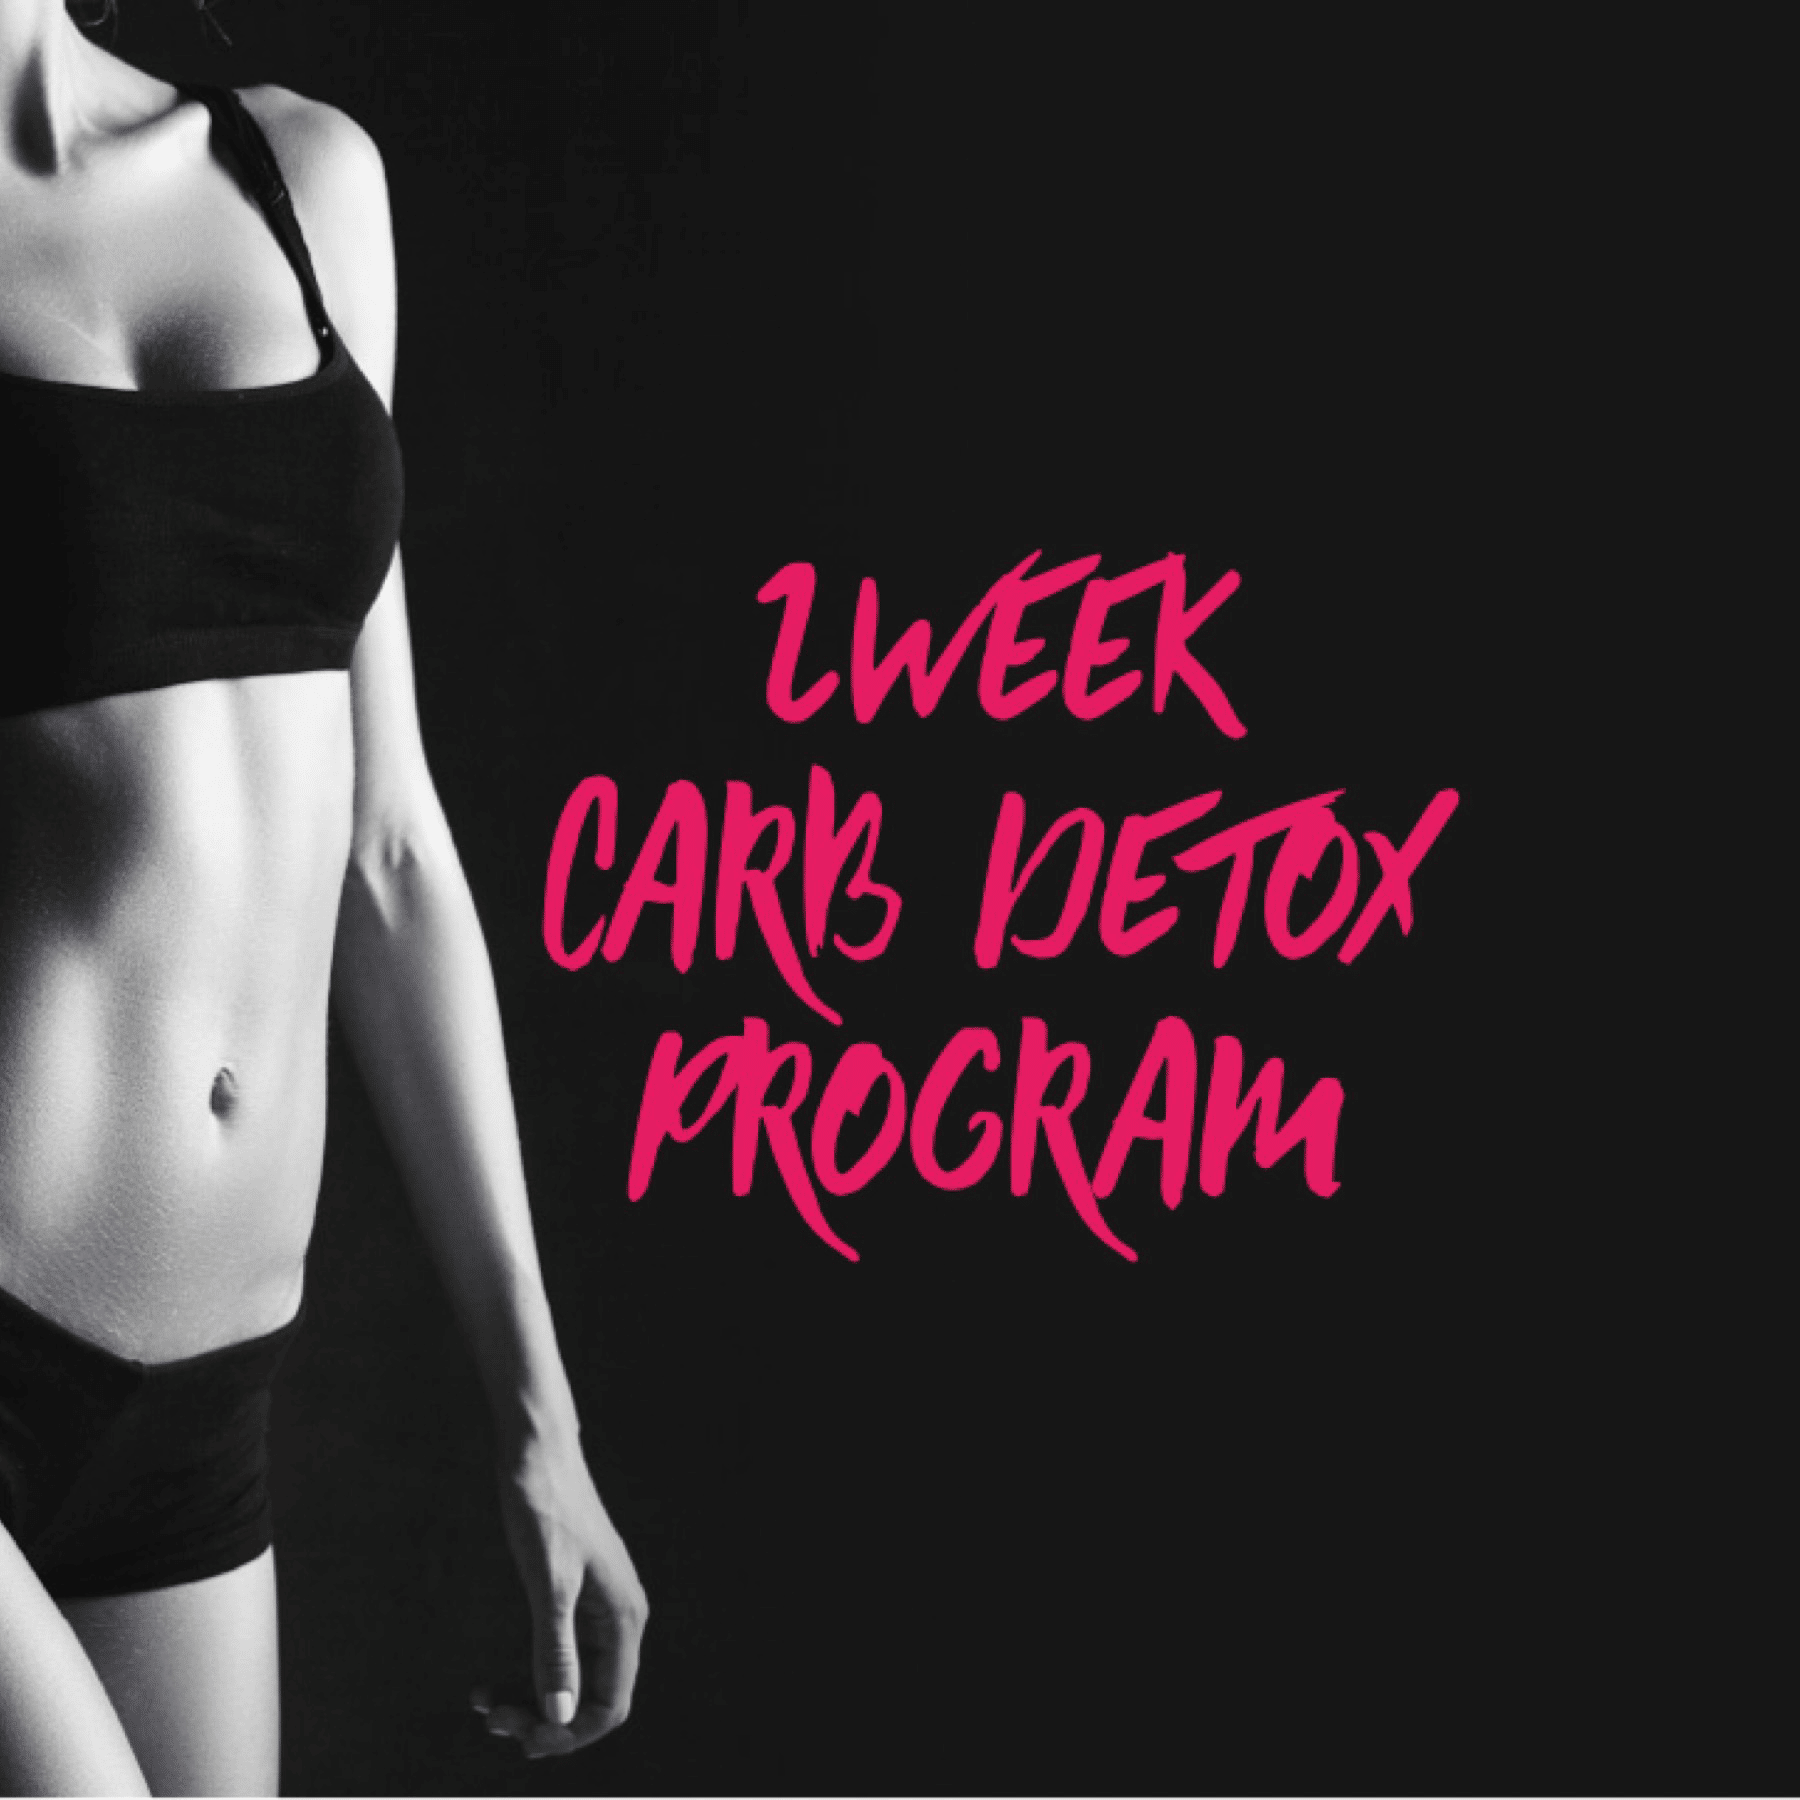 2 week carb detox